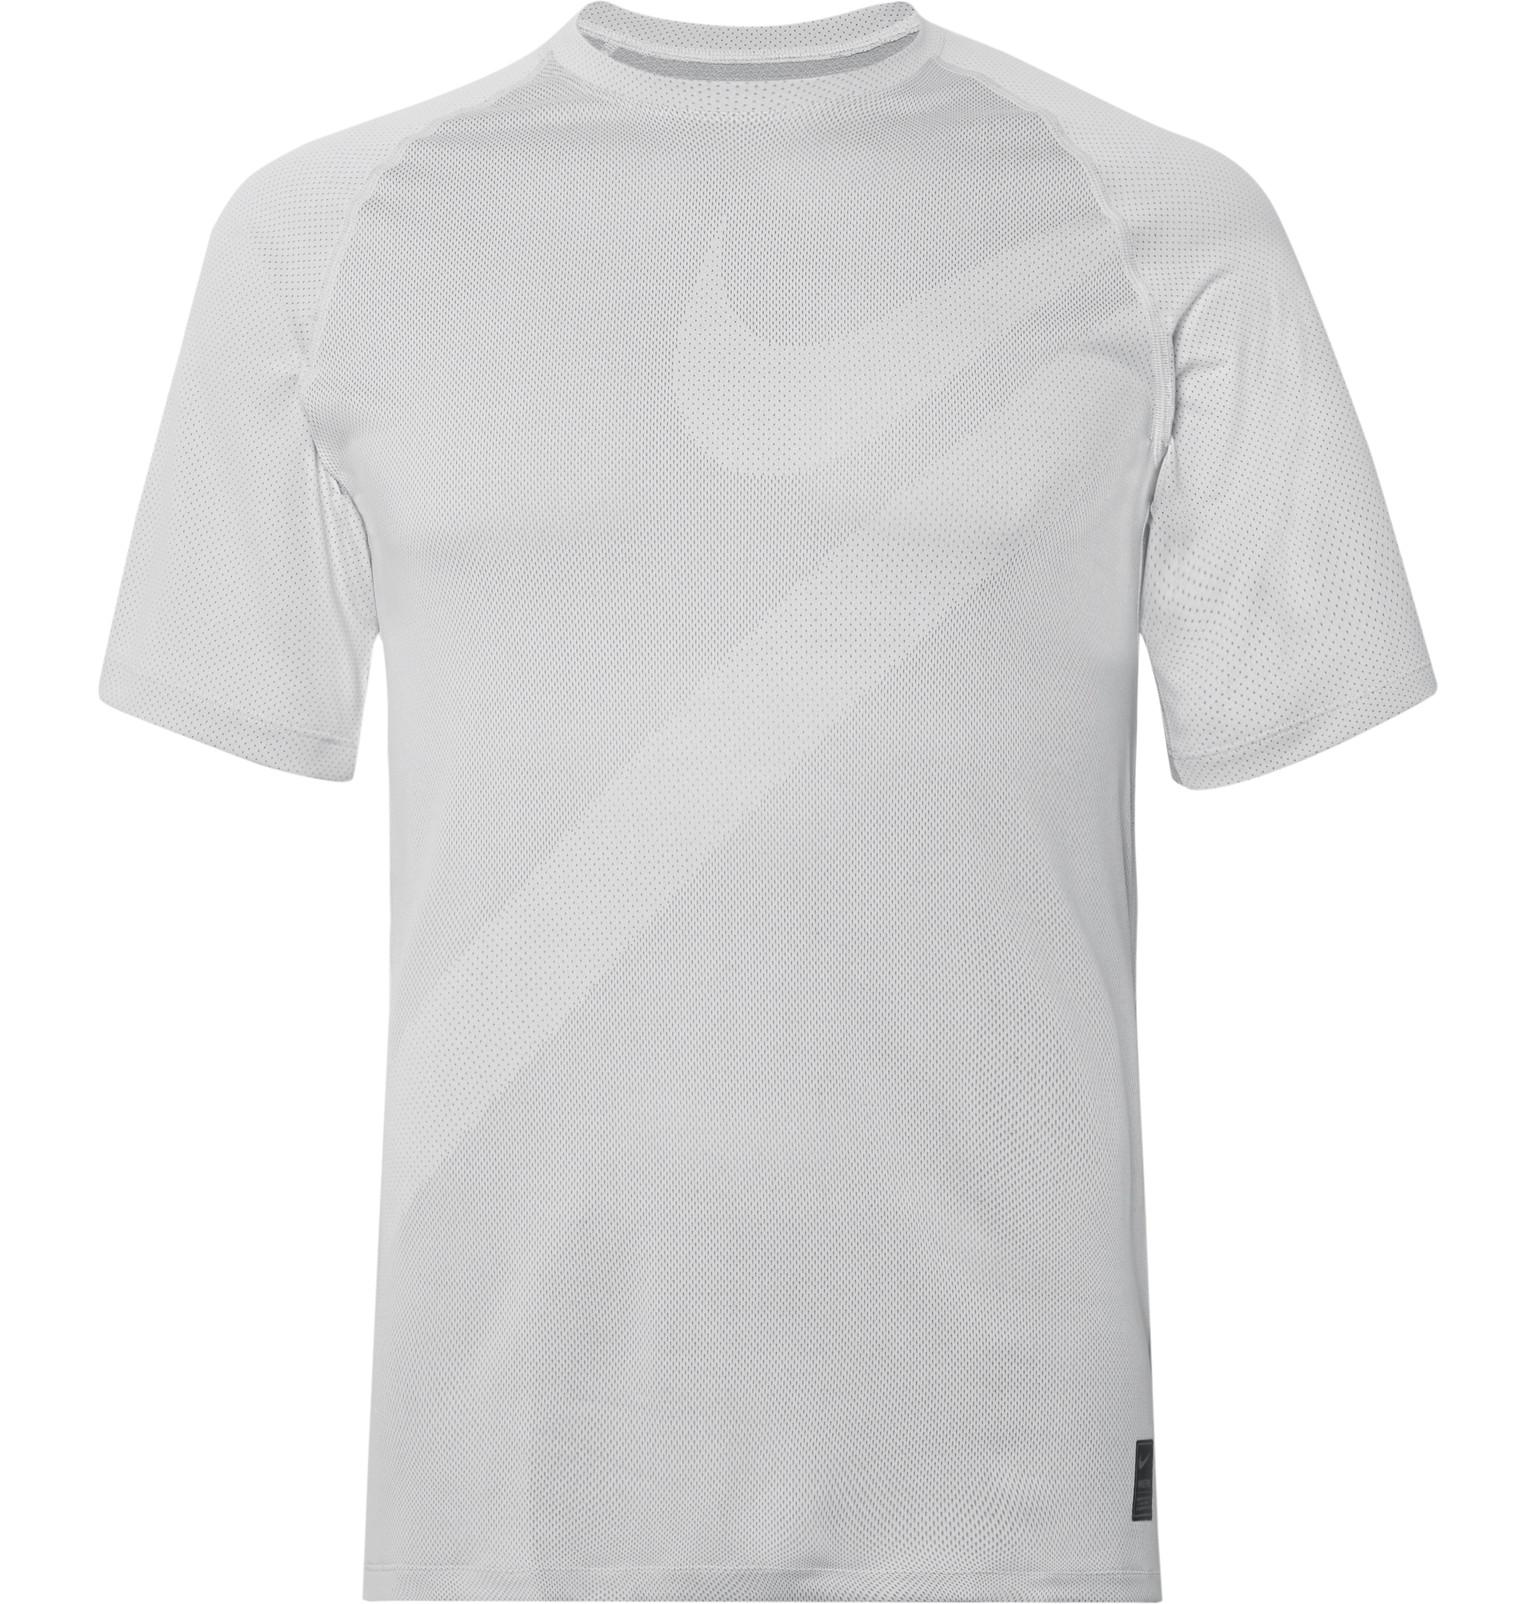 Nike Slim-fit Pro Dri-fit T-shirt in Gray for Men - Lyst